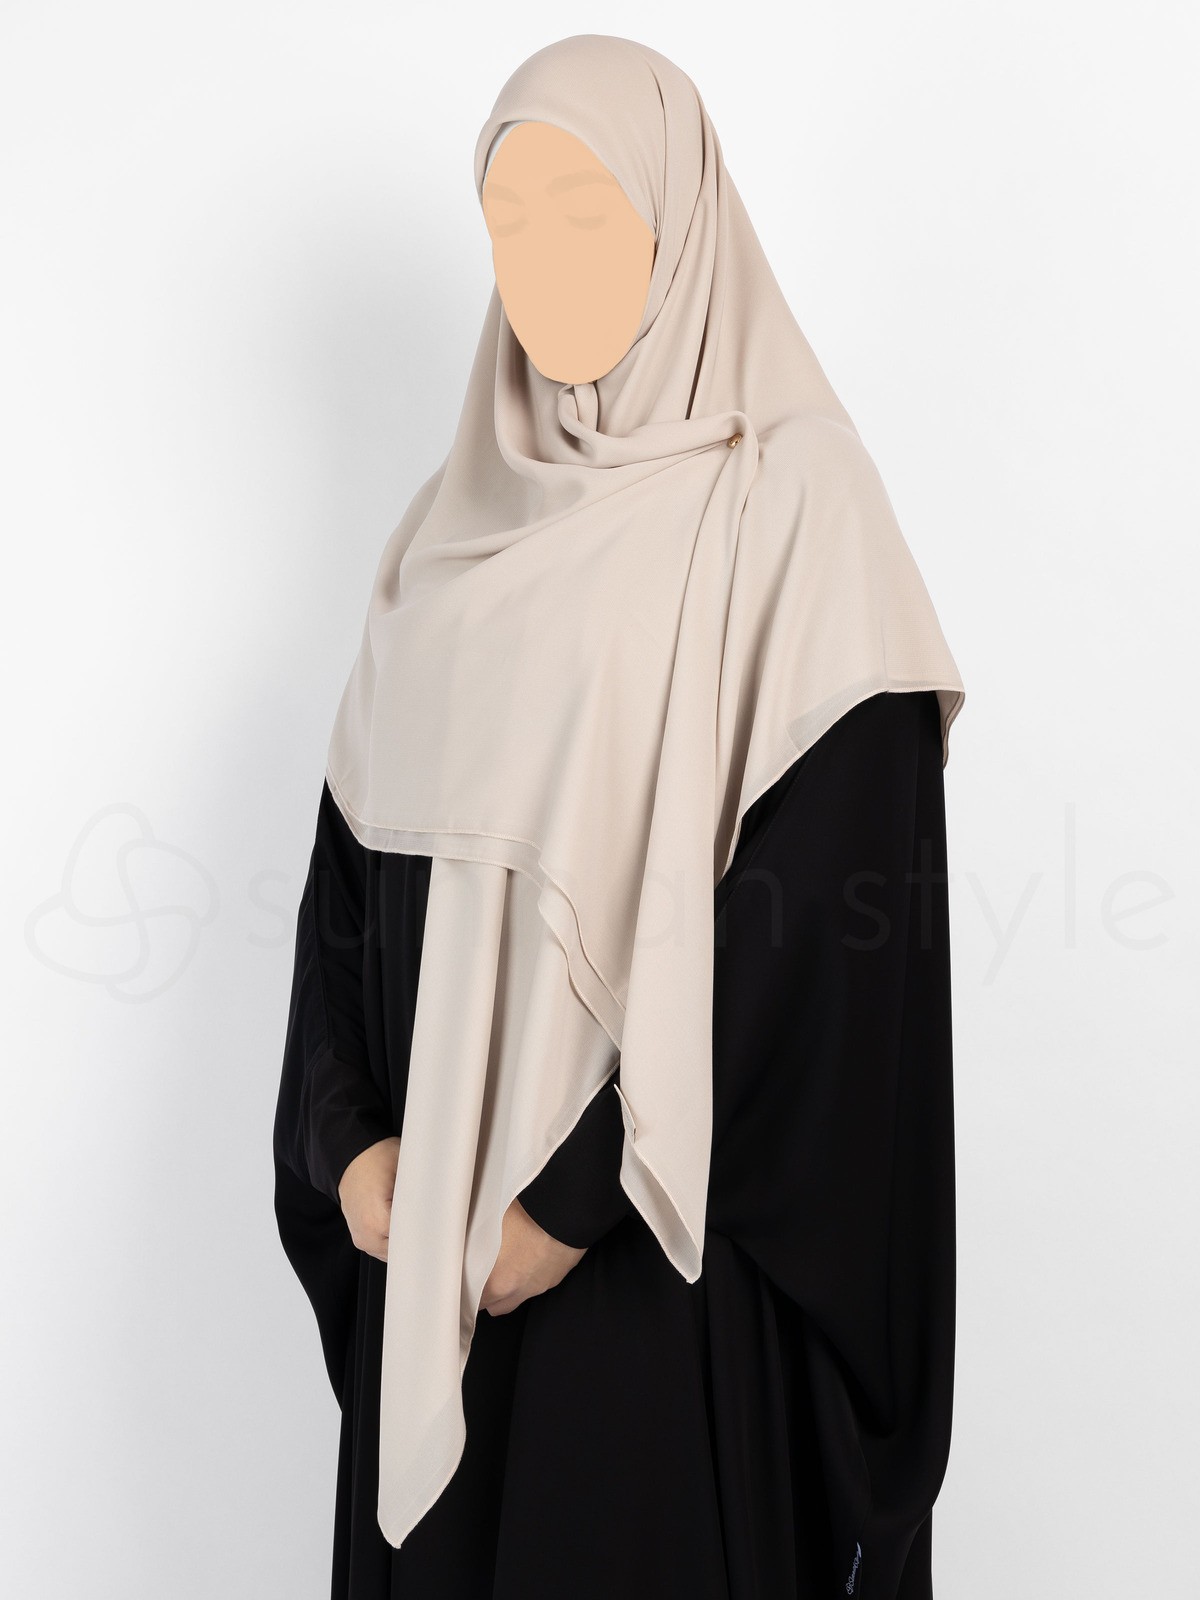 Sunnah Style - Essentials Square Hijab (Premium Chiffon) - Large (Sahara)